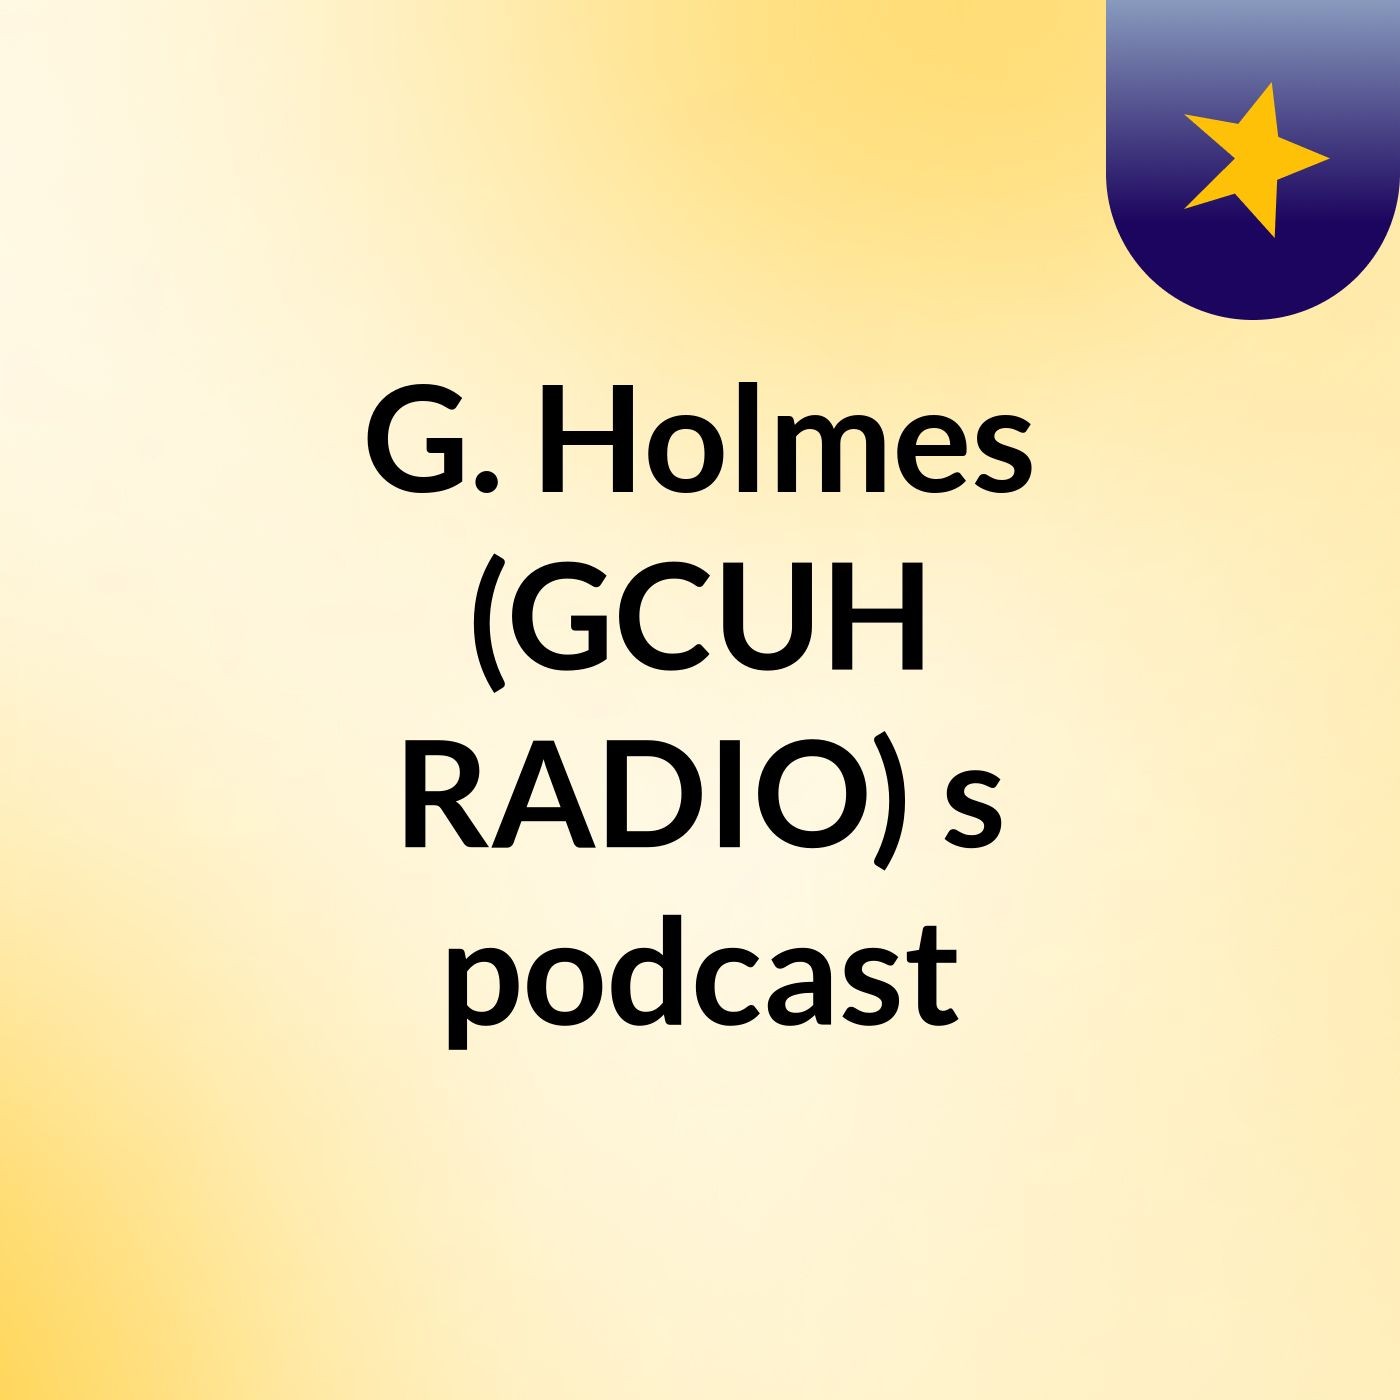 Episode 3 - G. Holmes (GCUH RADIO)'s podcast